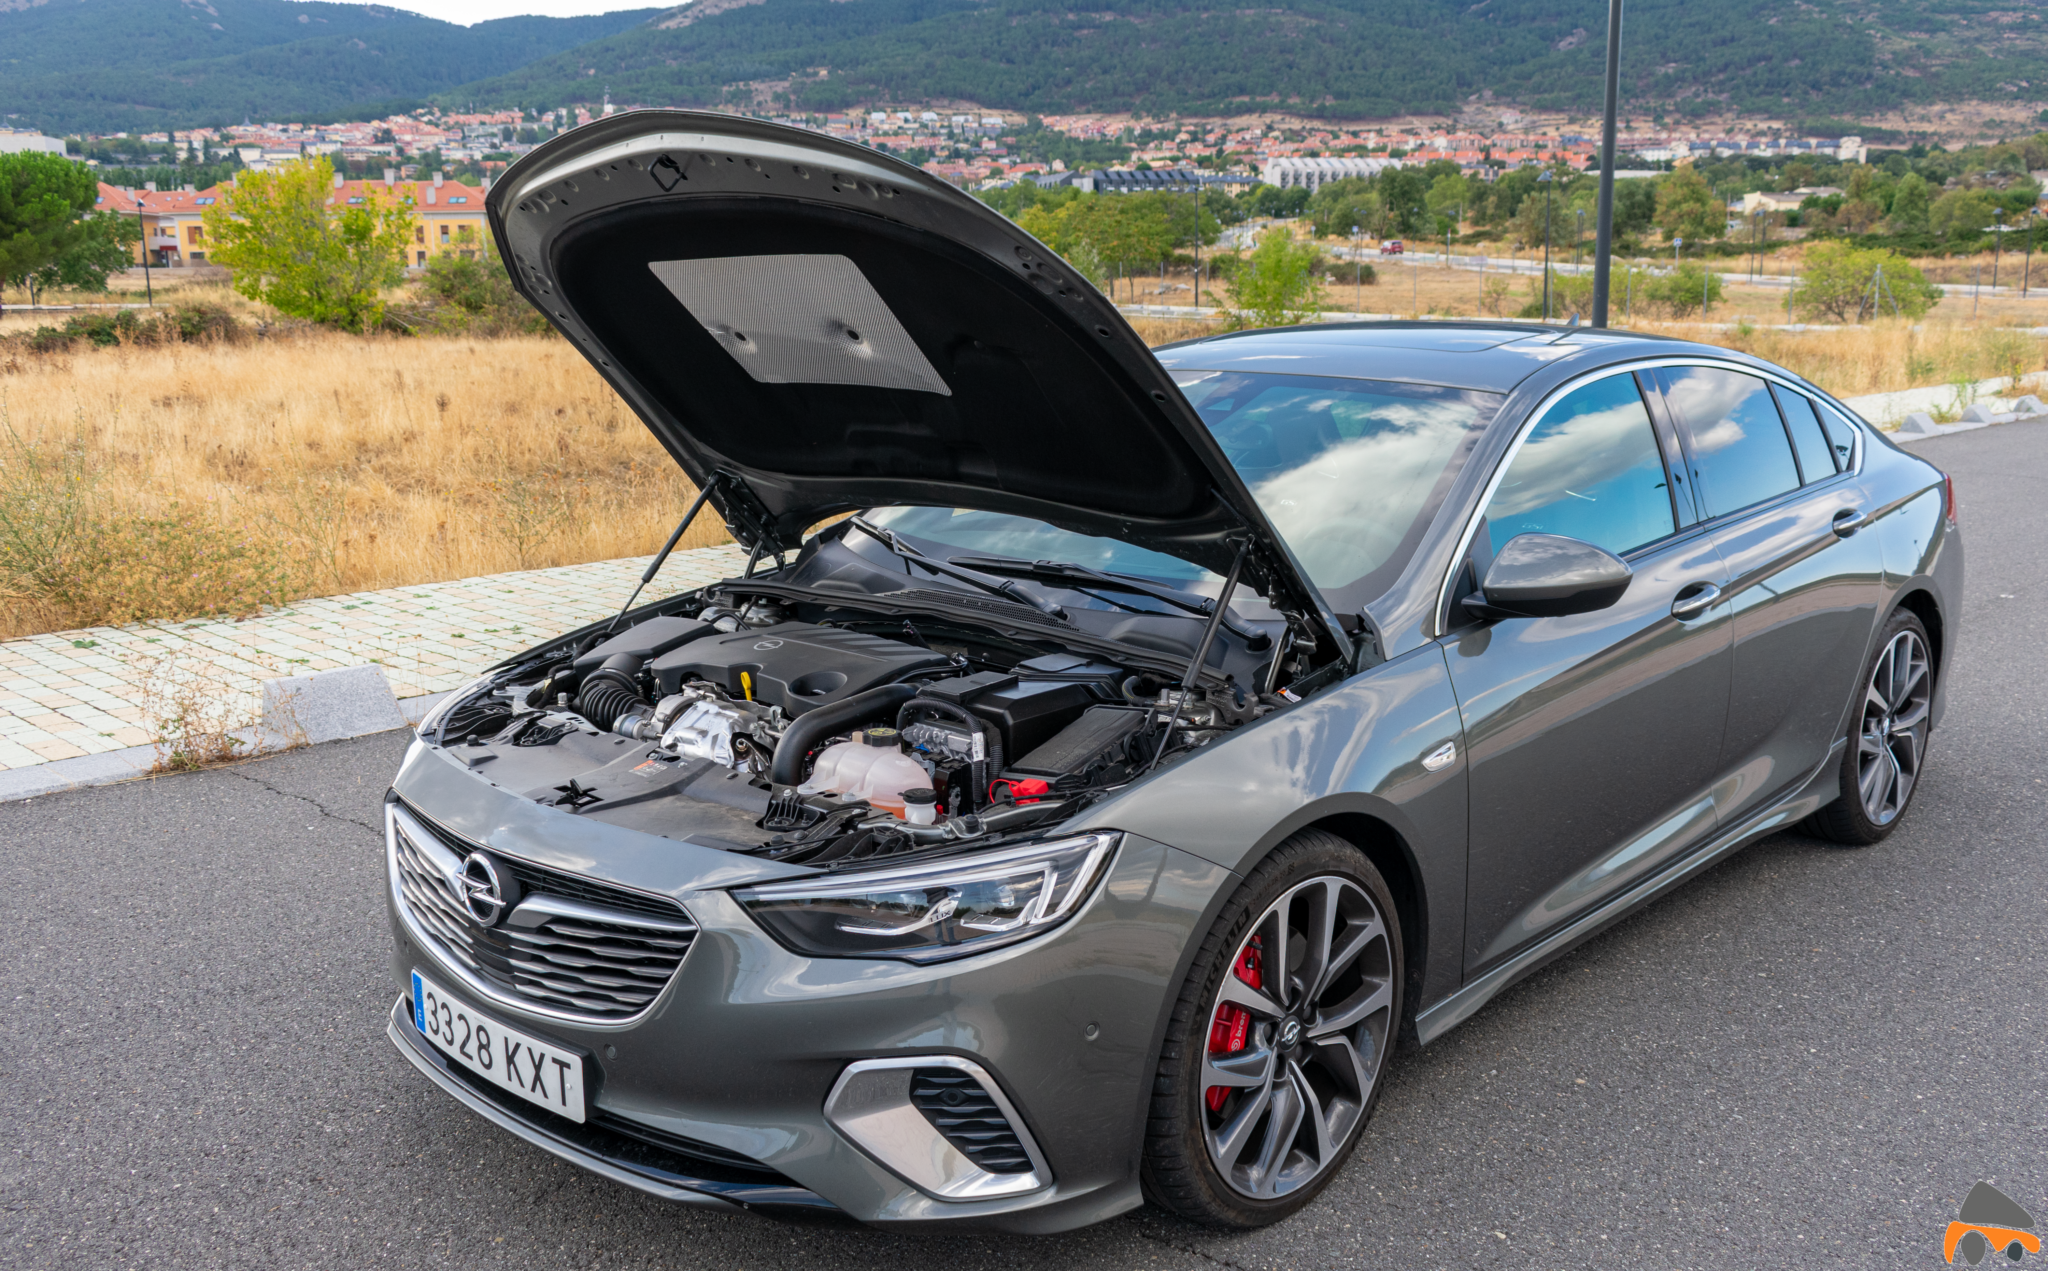 Motor Opel Insignia GSi - Opel Insignia Grand Sport GSi: ¿Una berlina diésel y deportiva?